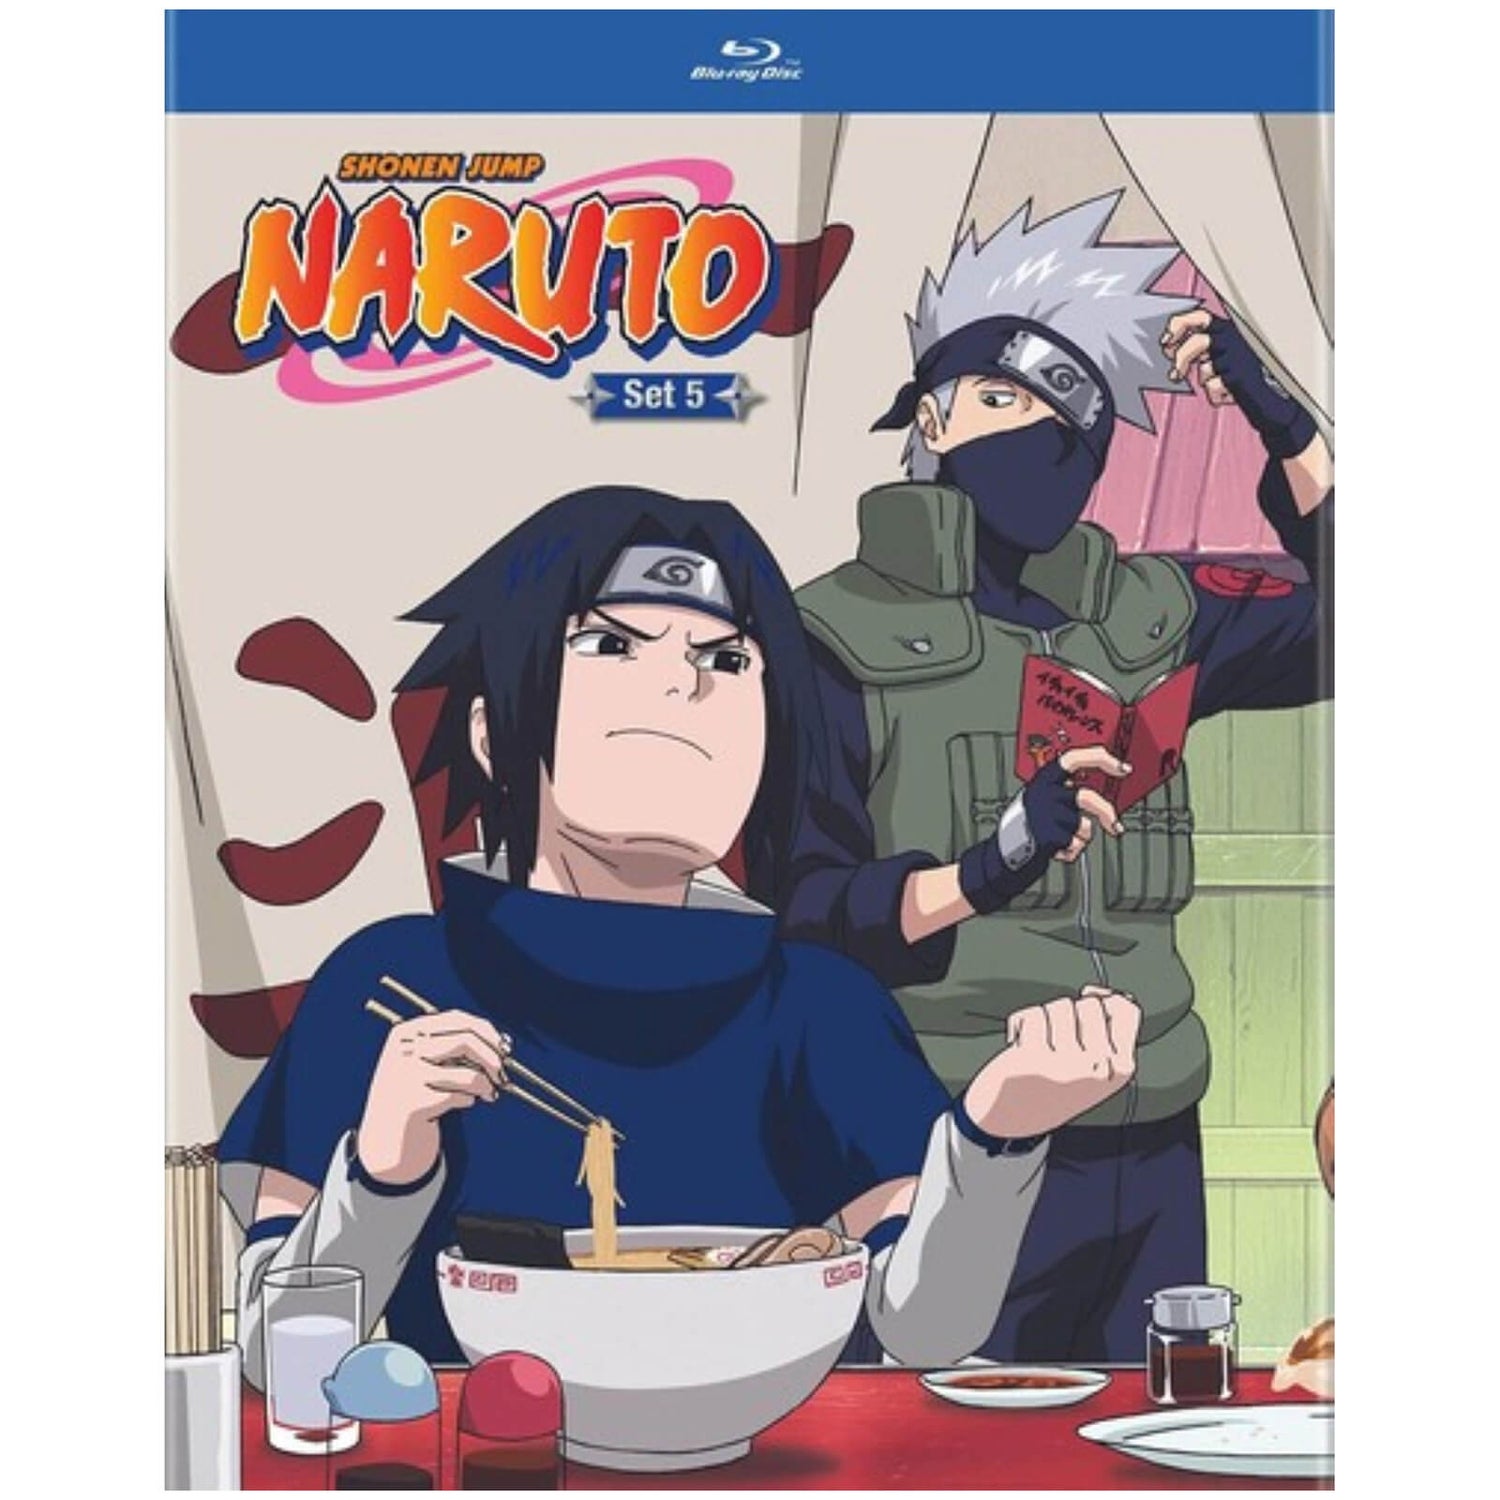 Naruto: Set 5 (US Import)